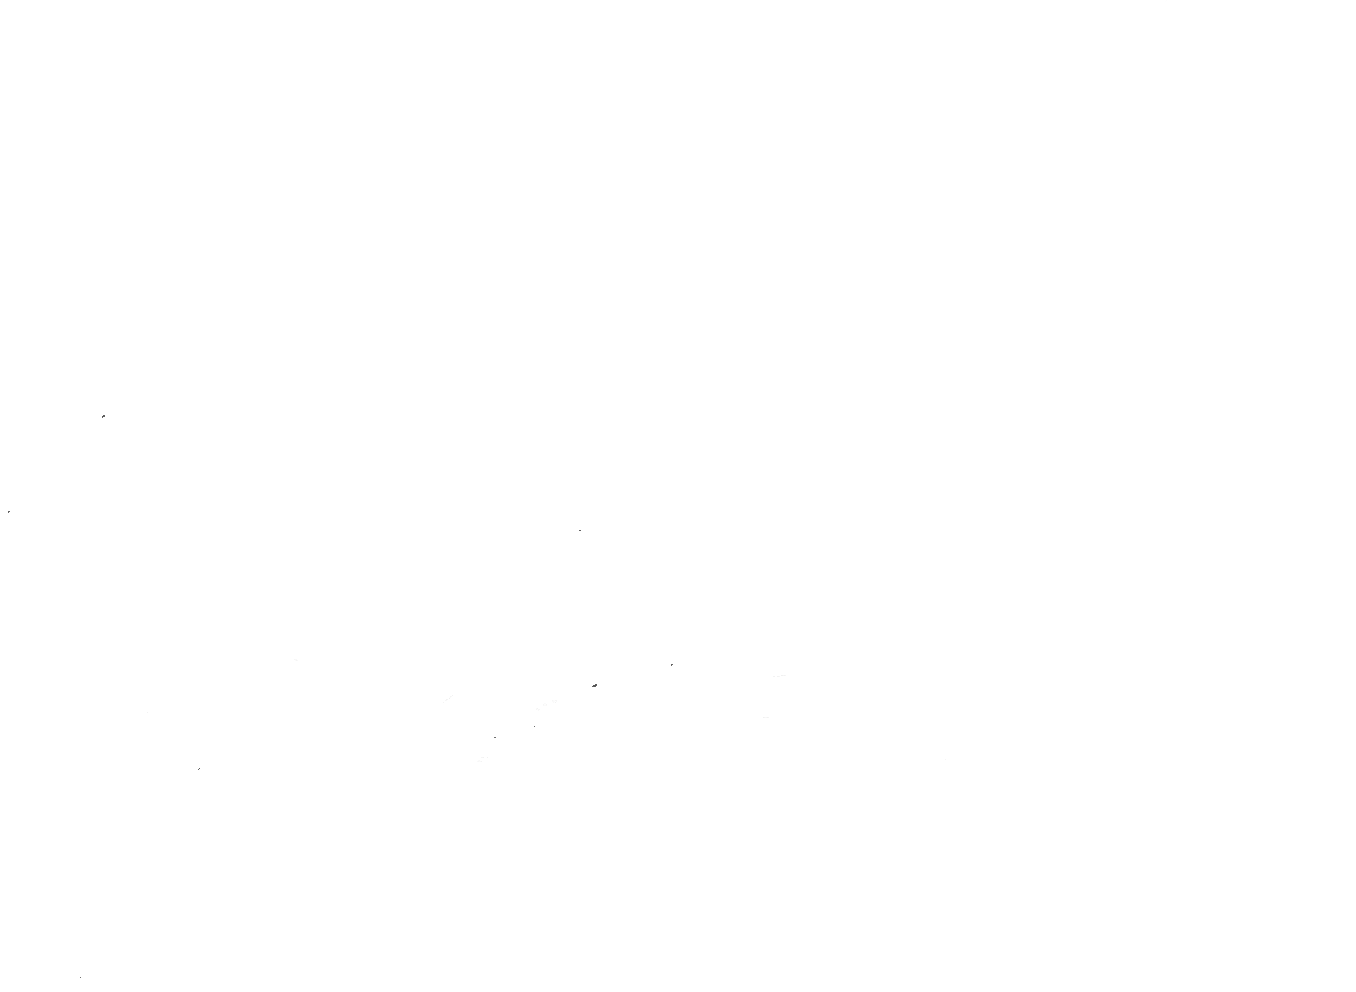 Harbor Ballet Theatre